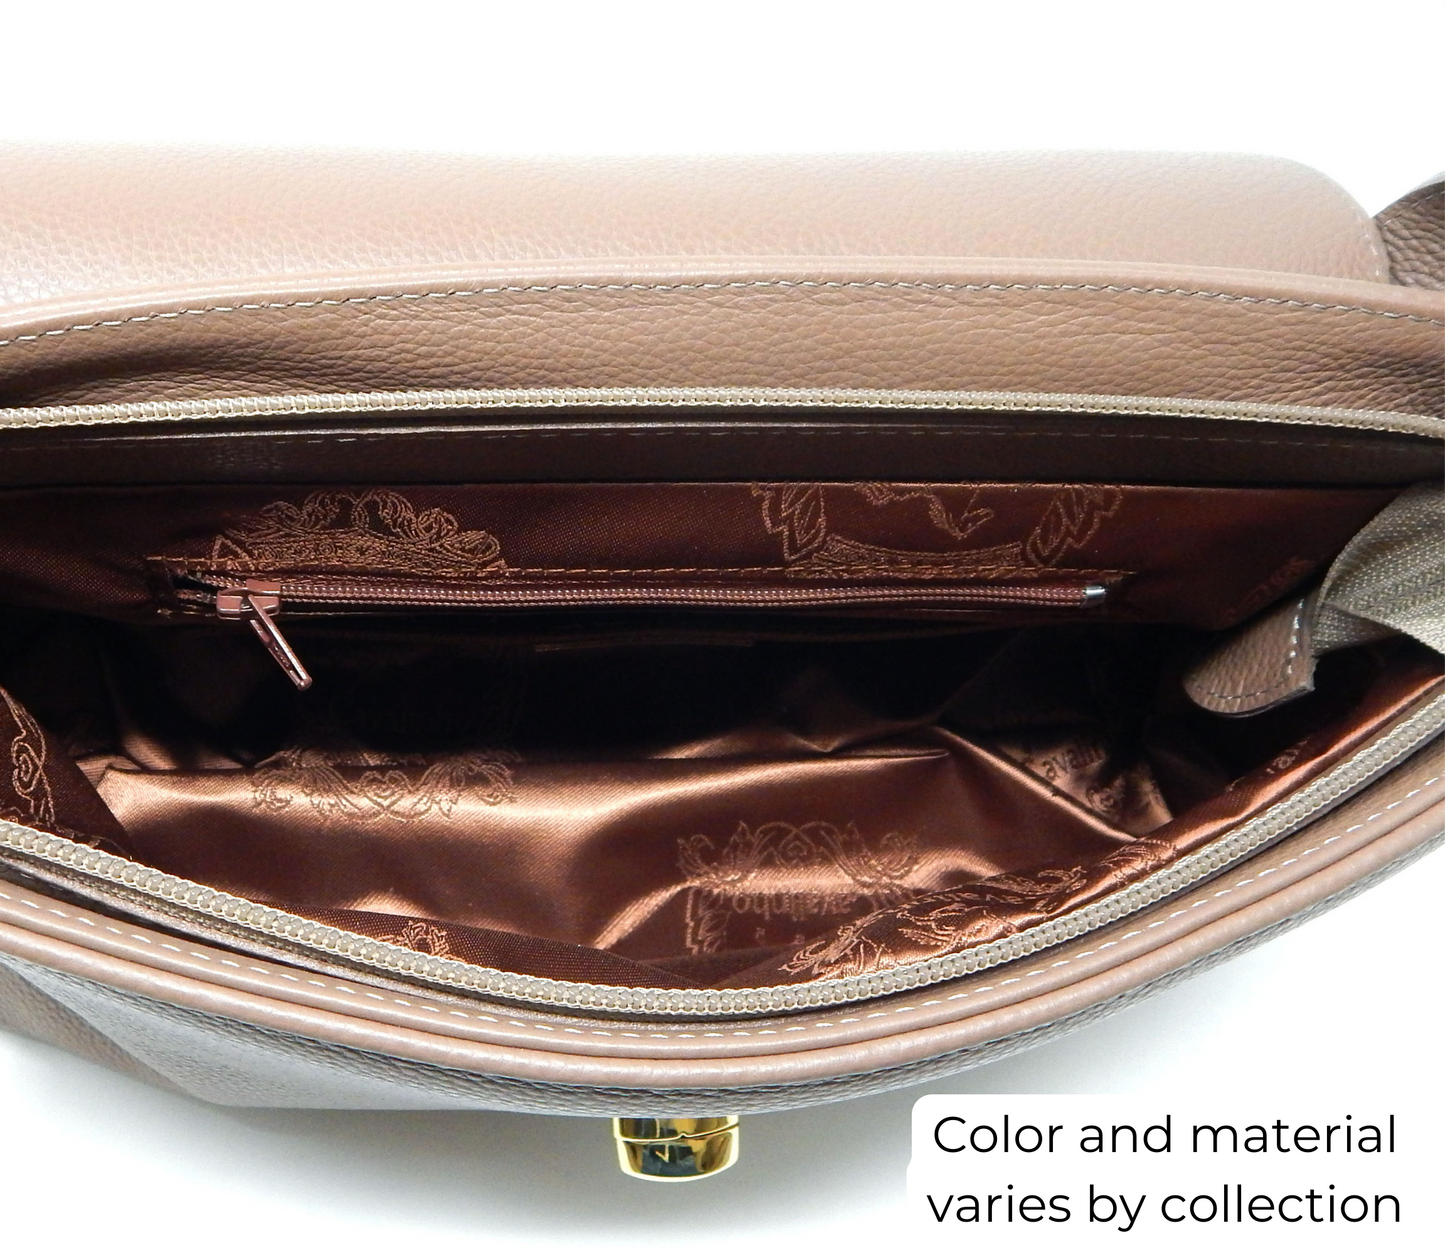 Cavalinho Muse Leather Handbag - Black - inside_0514_af90fa9c-fe5f-4089-ad8b-13d72a1c97d3